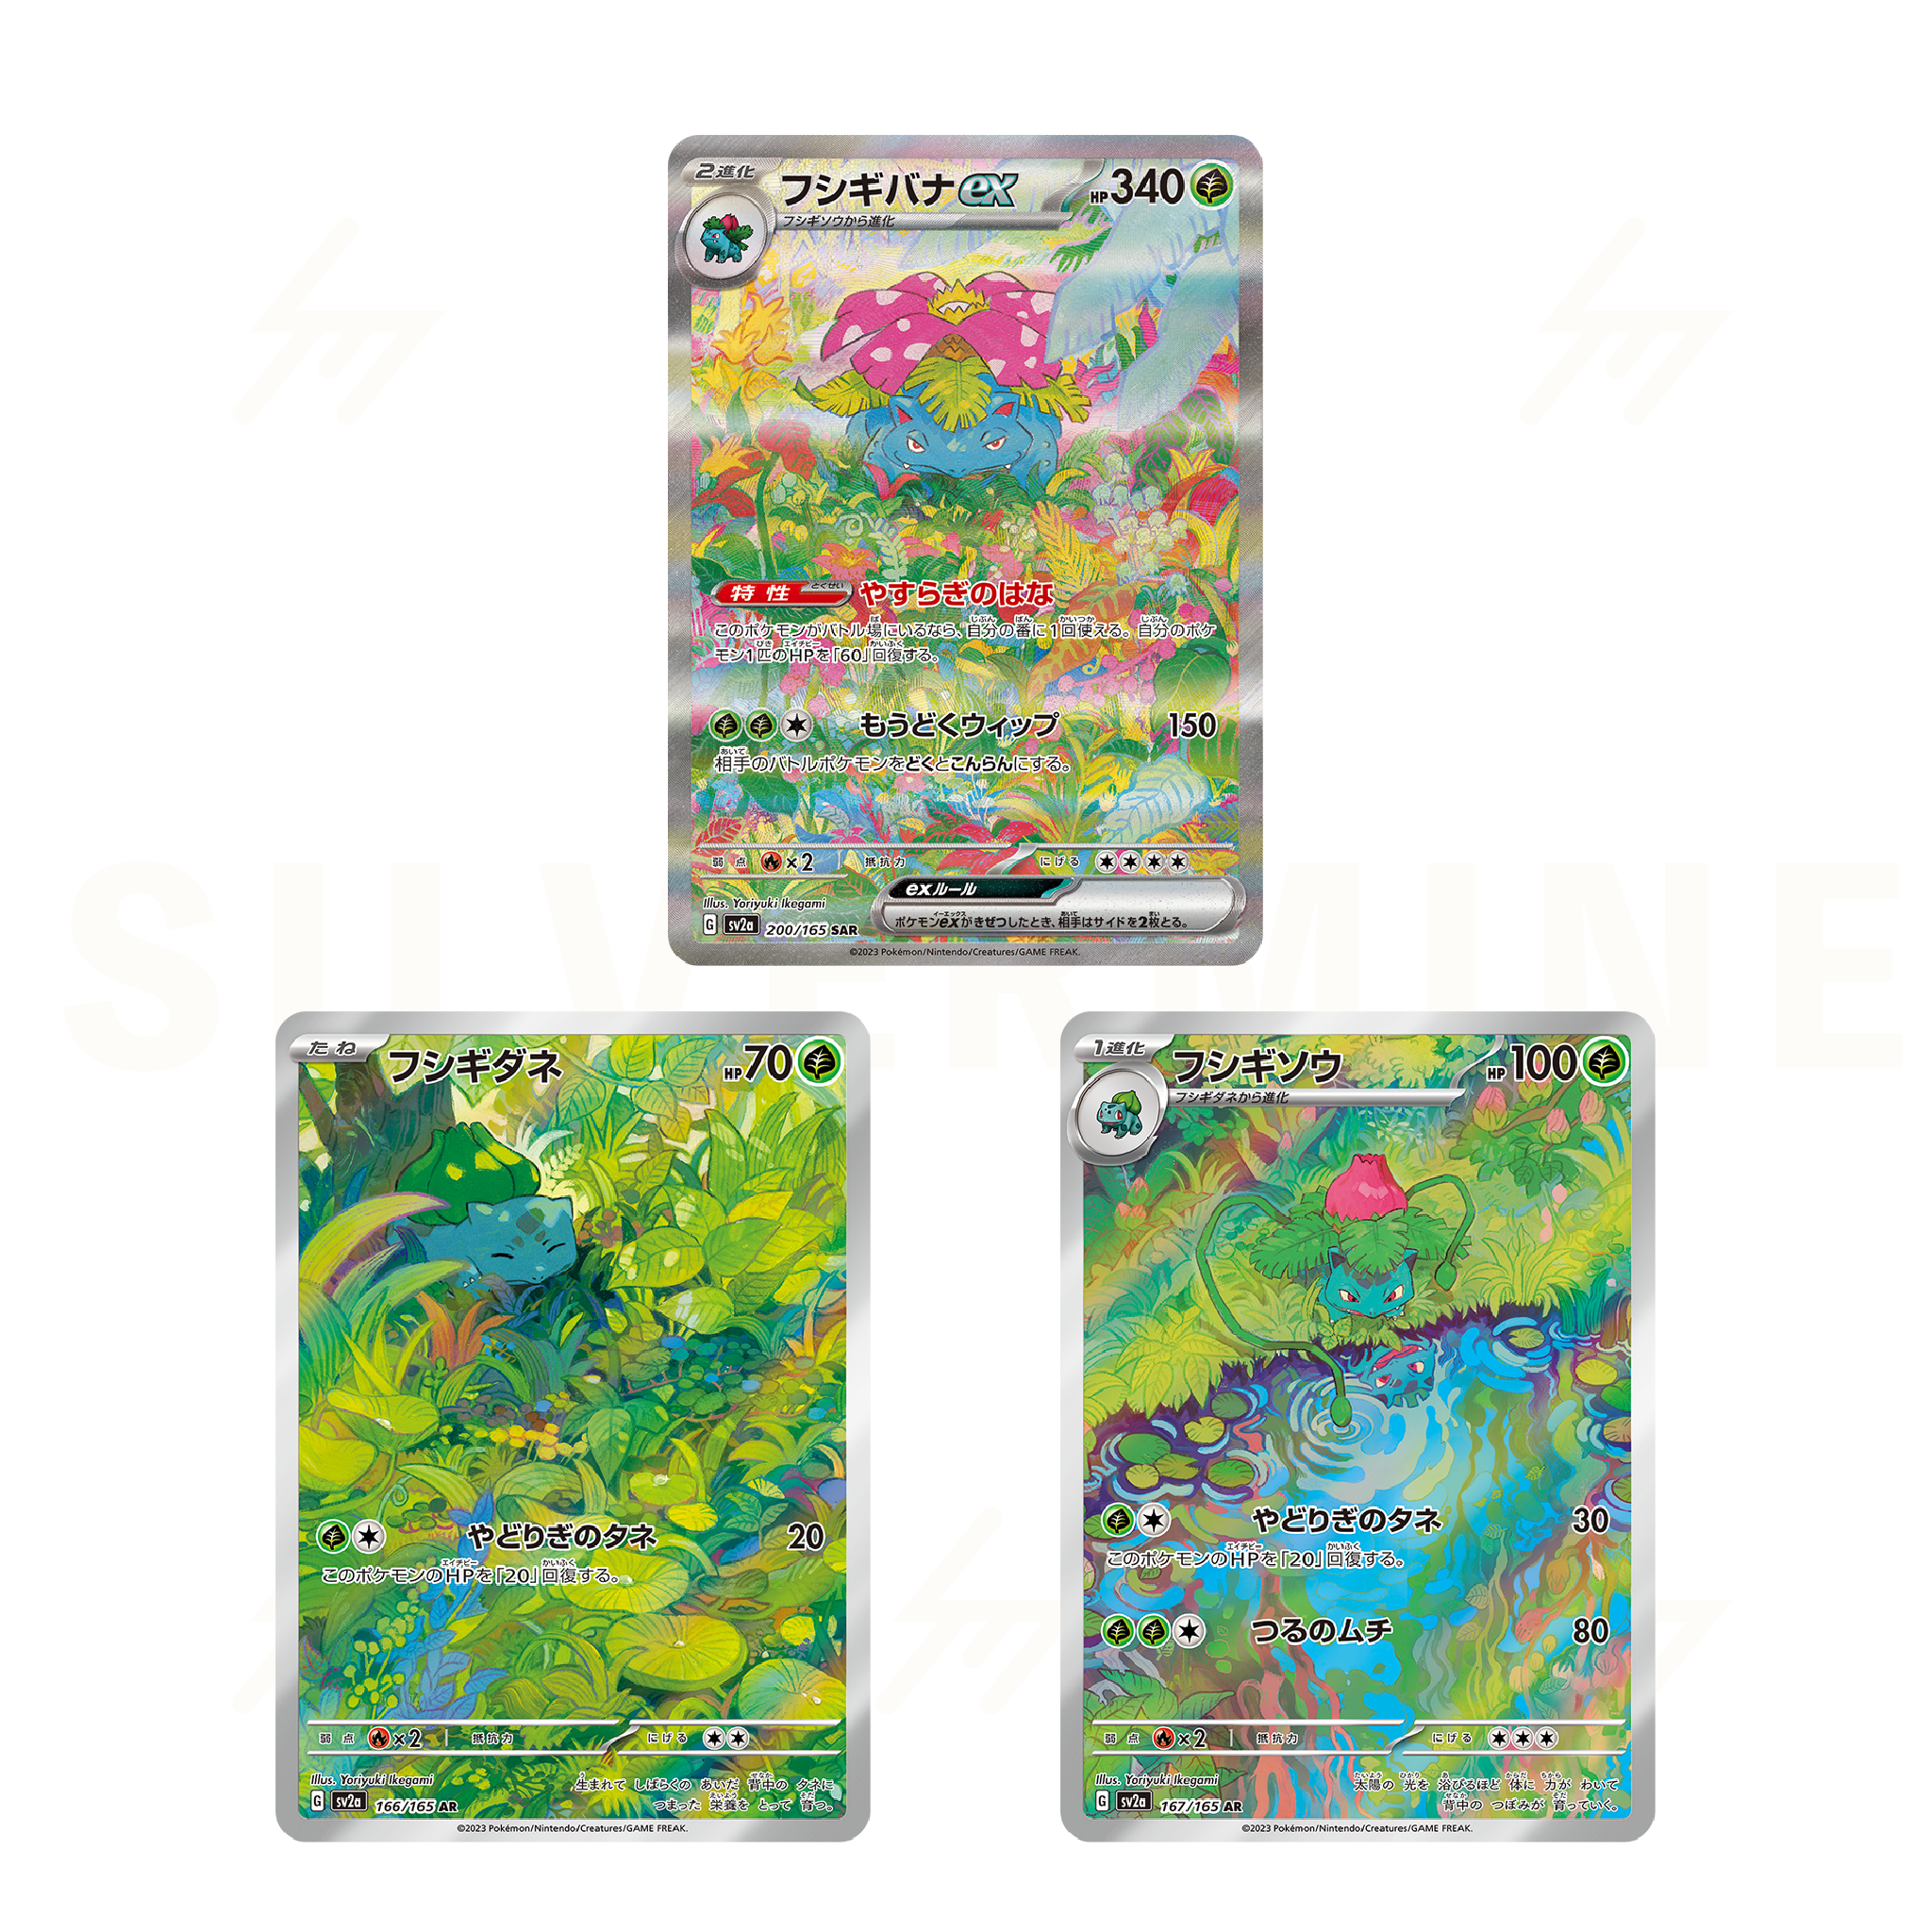 sv2a - Pokemon TCG - Booster Box - Scarlet & Violet - Pokemon Card 151